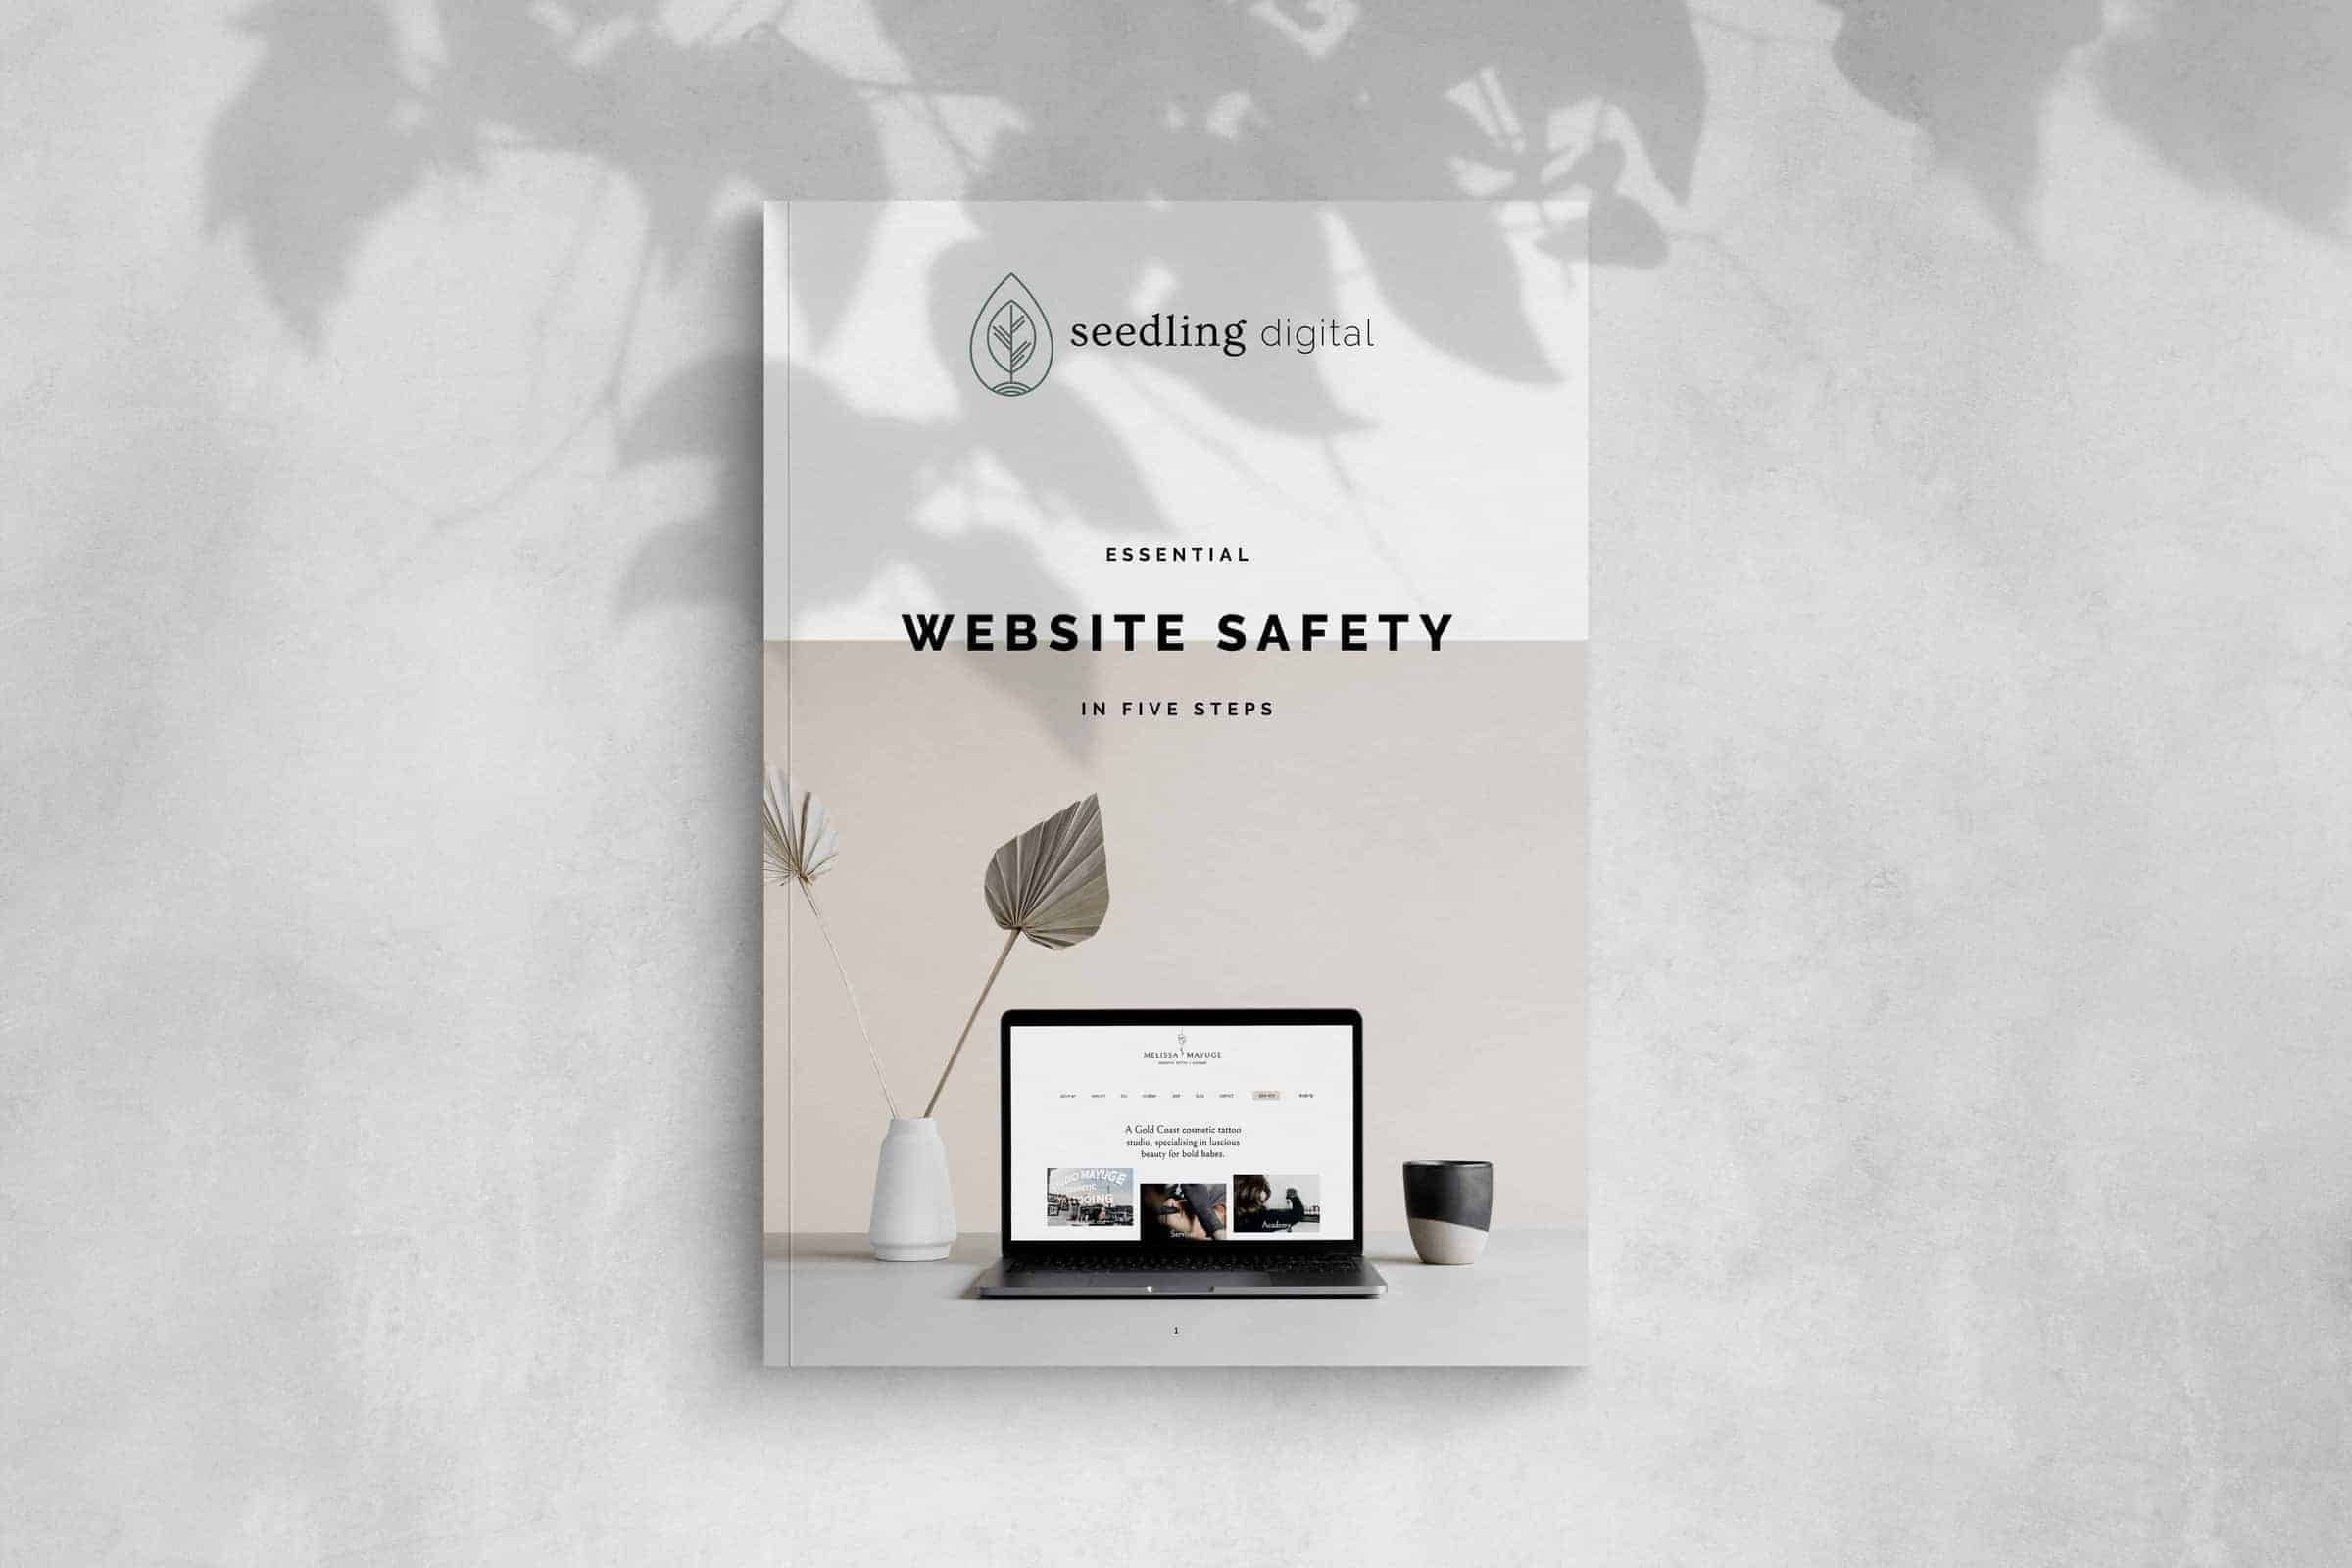 Website safety brochure template designed by Seedling Digital in Australia.